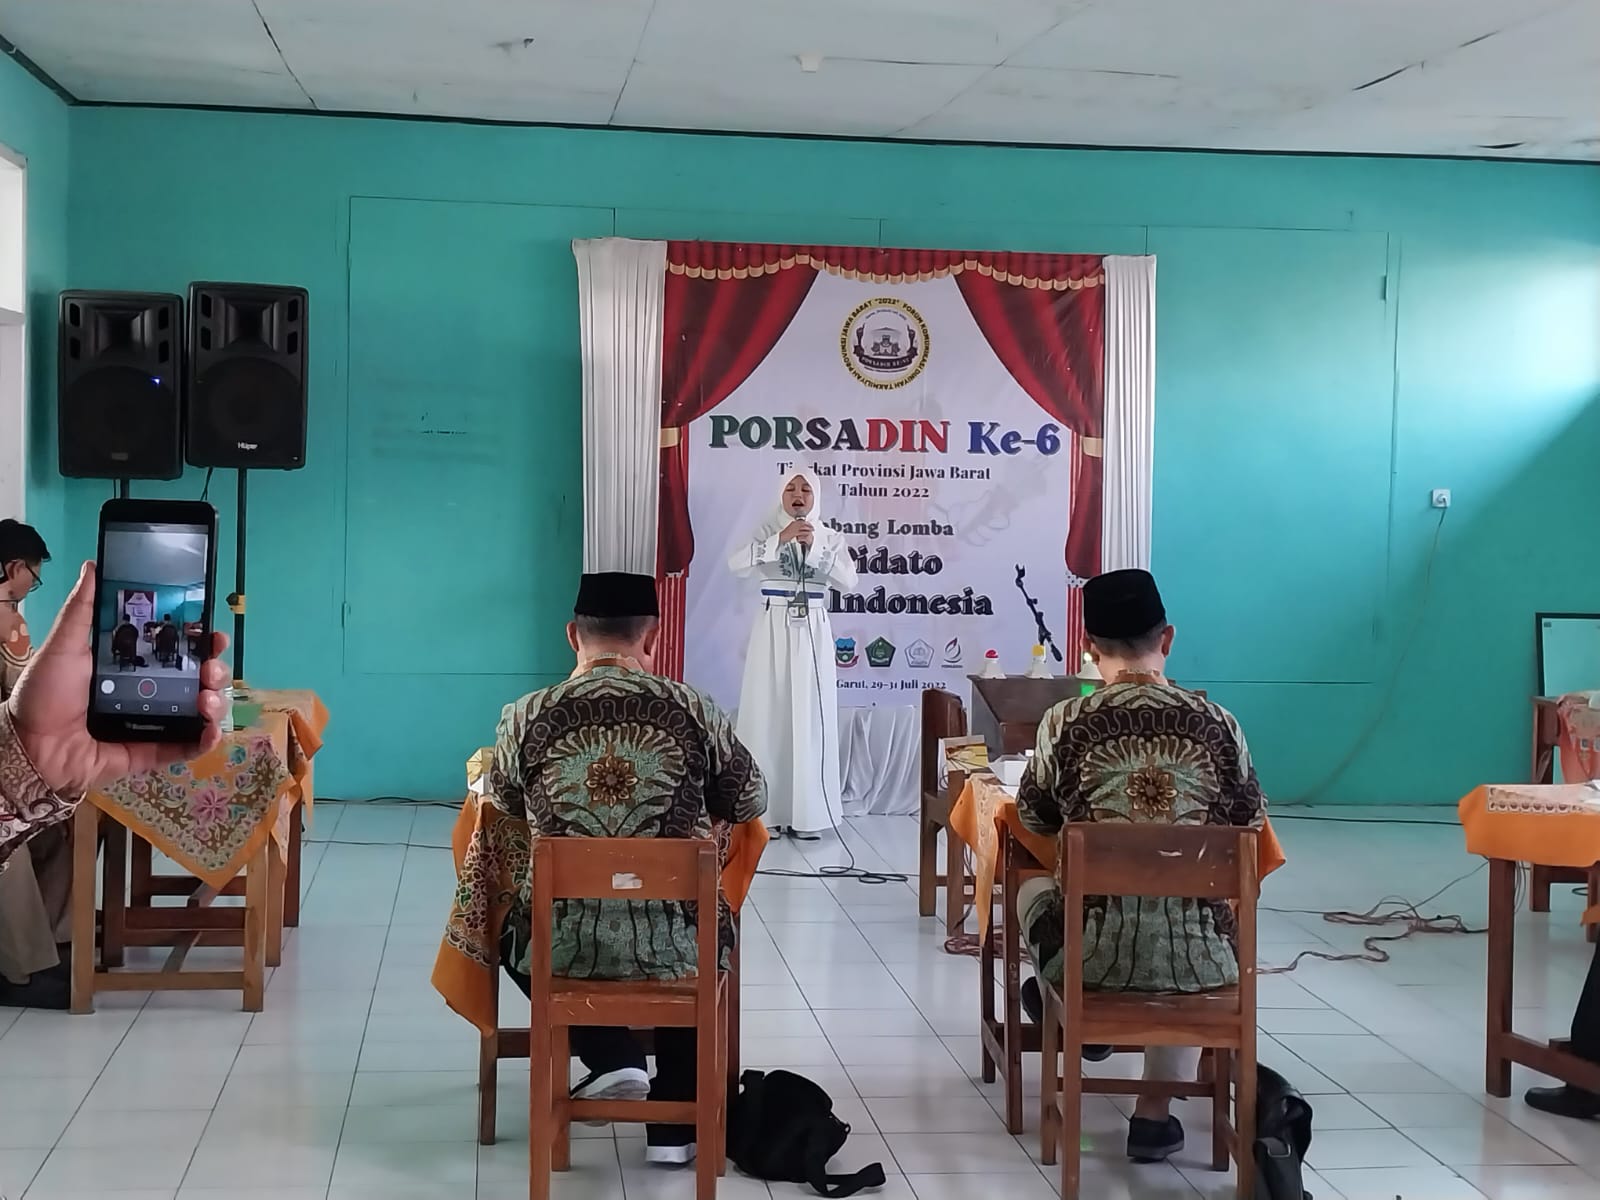 Juara 1 di Ajang di Porsadin Provinsi Jawa Barat, Zahra Allya: Hadiah untuk Hari Jadi Cirebon ke-653